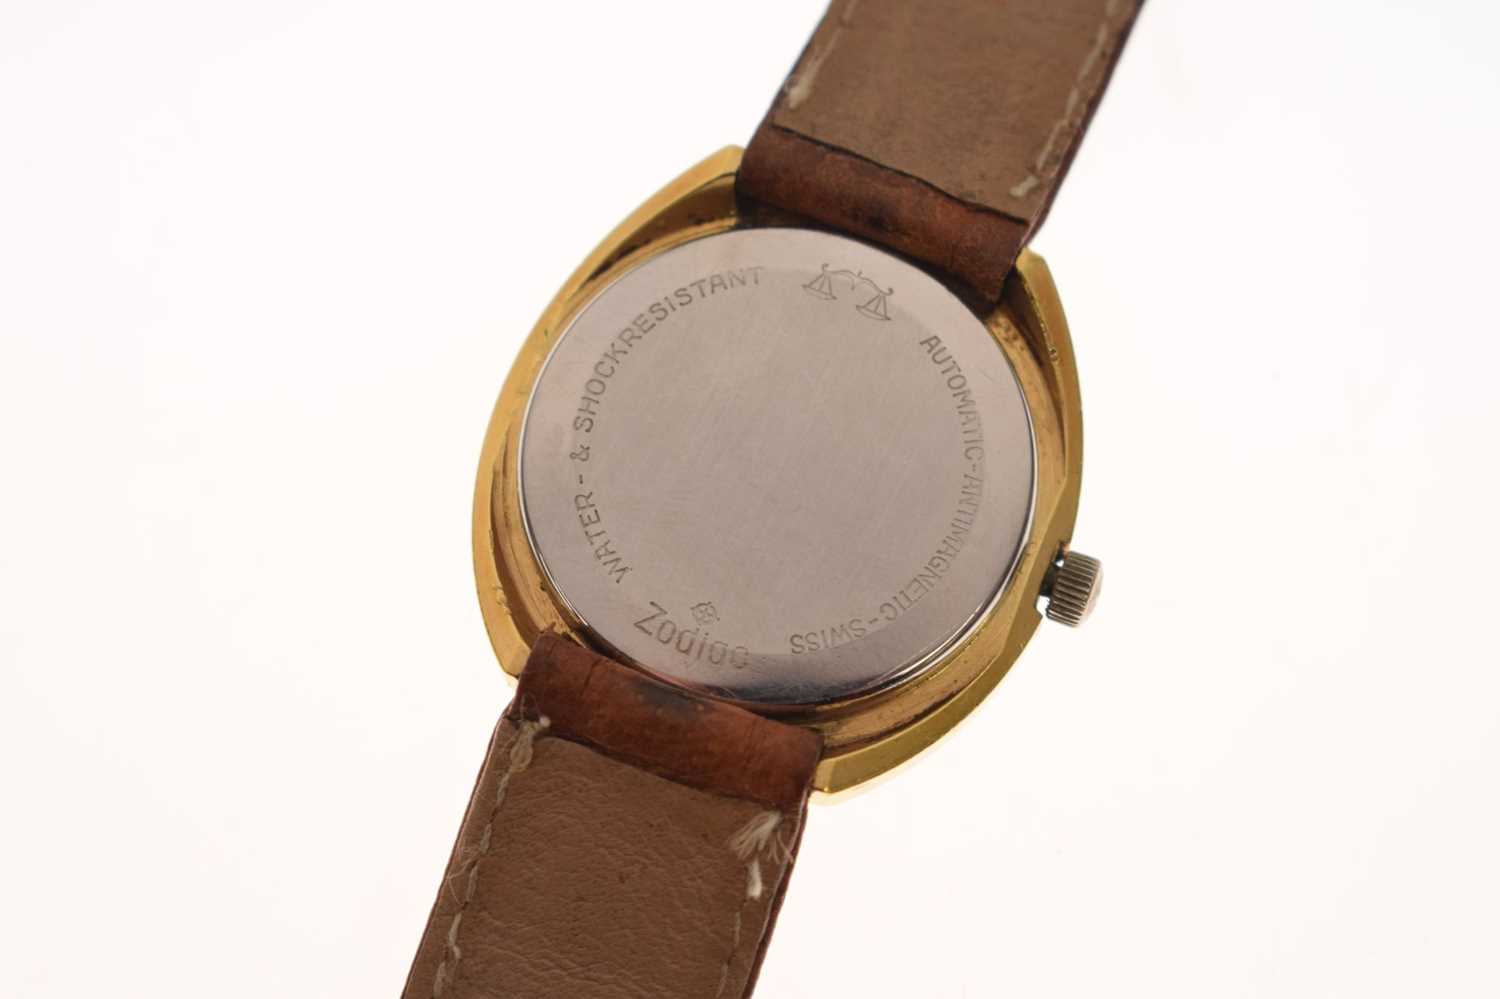 Zodiac - Gentleman's 'Kingline' Chronometer gold-plated cased wristwatch - Image 6 of 6